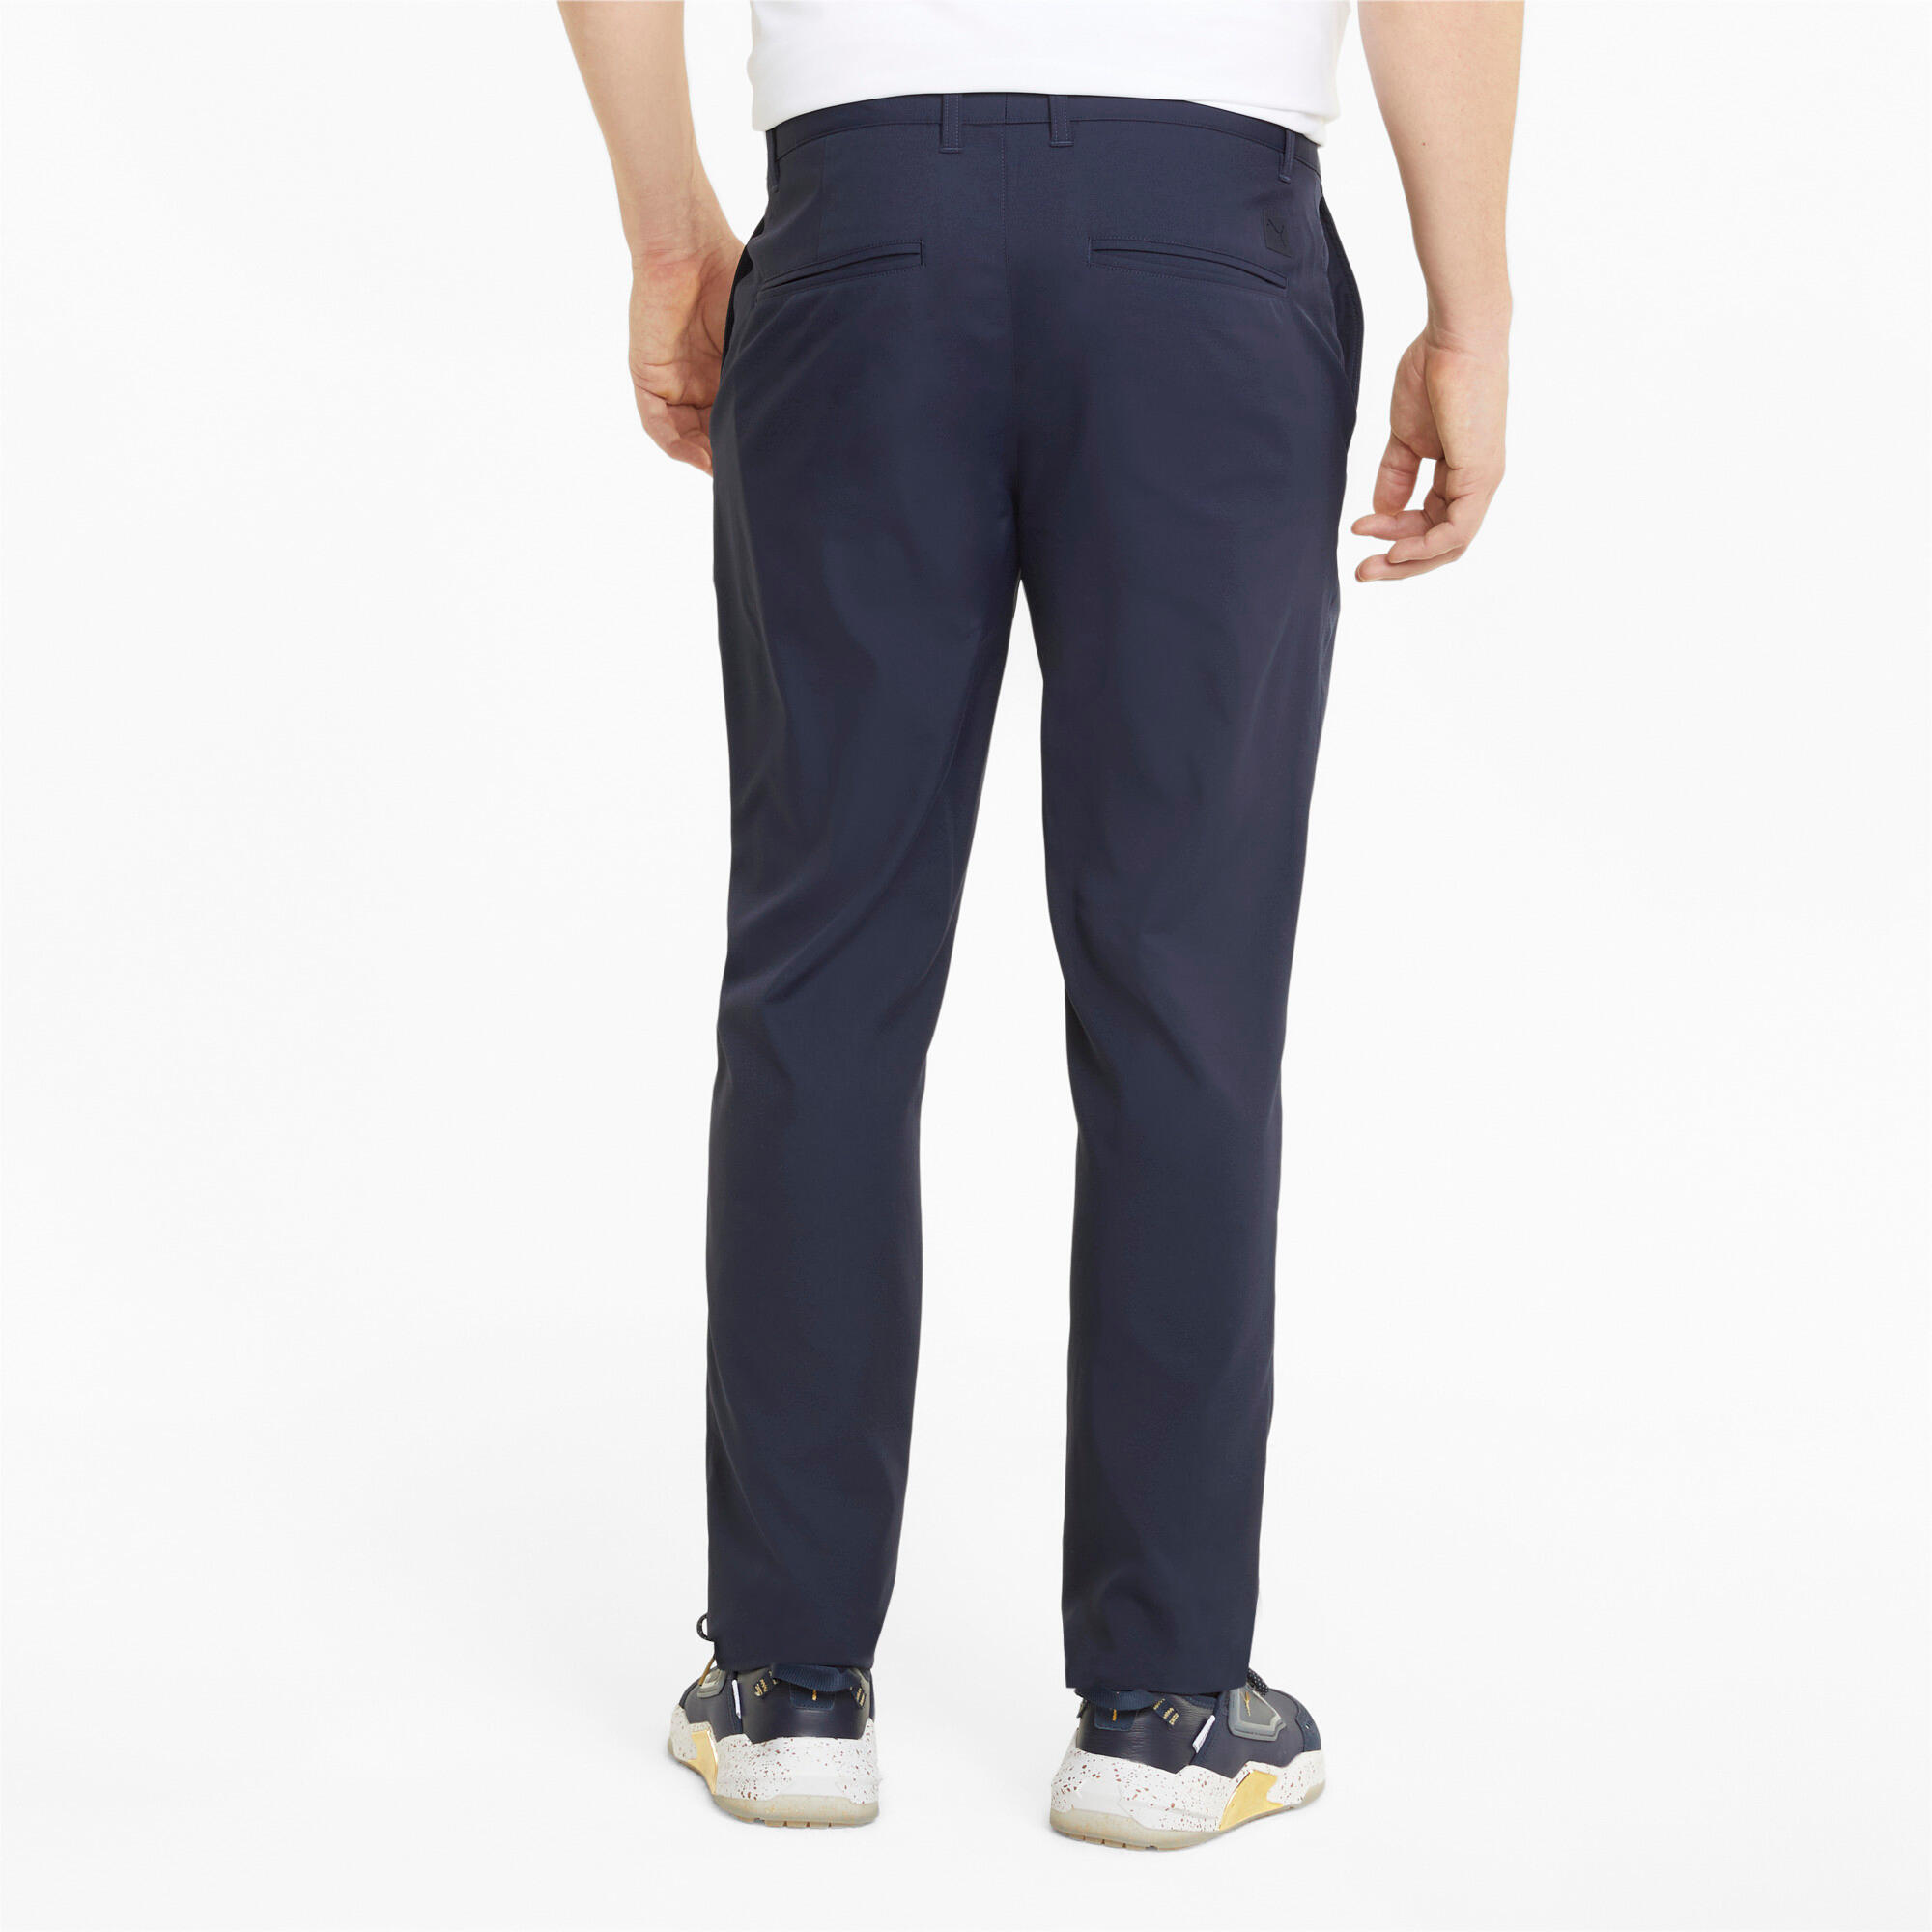 PUMA Mens Jackpot Tailored Golf Pants Trousers - Navy Blazer 1/4